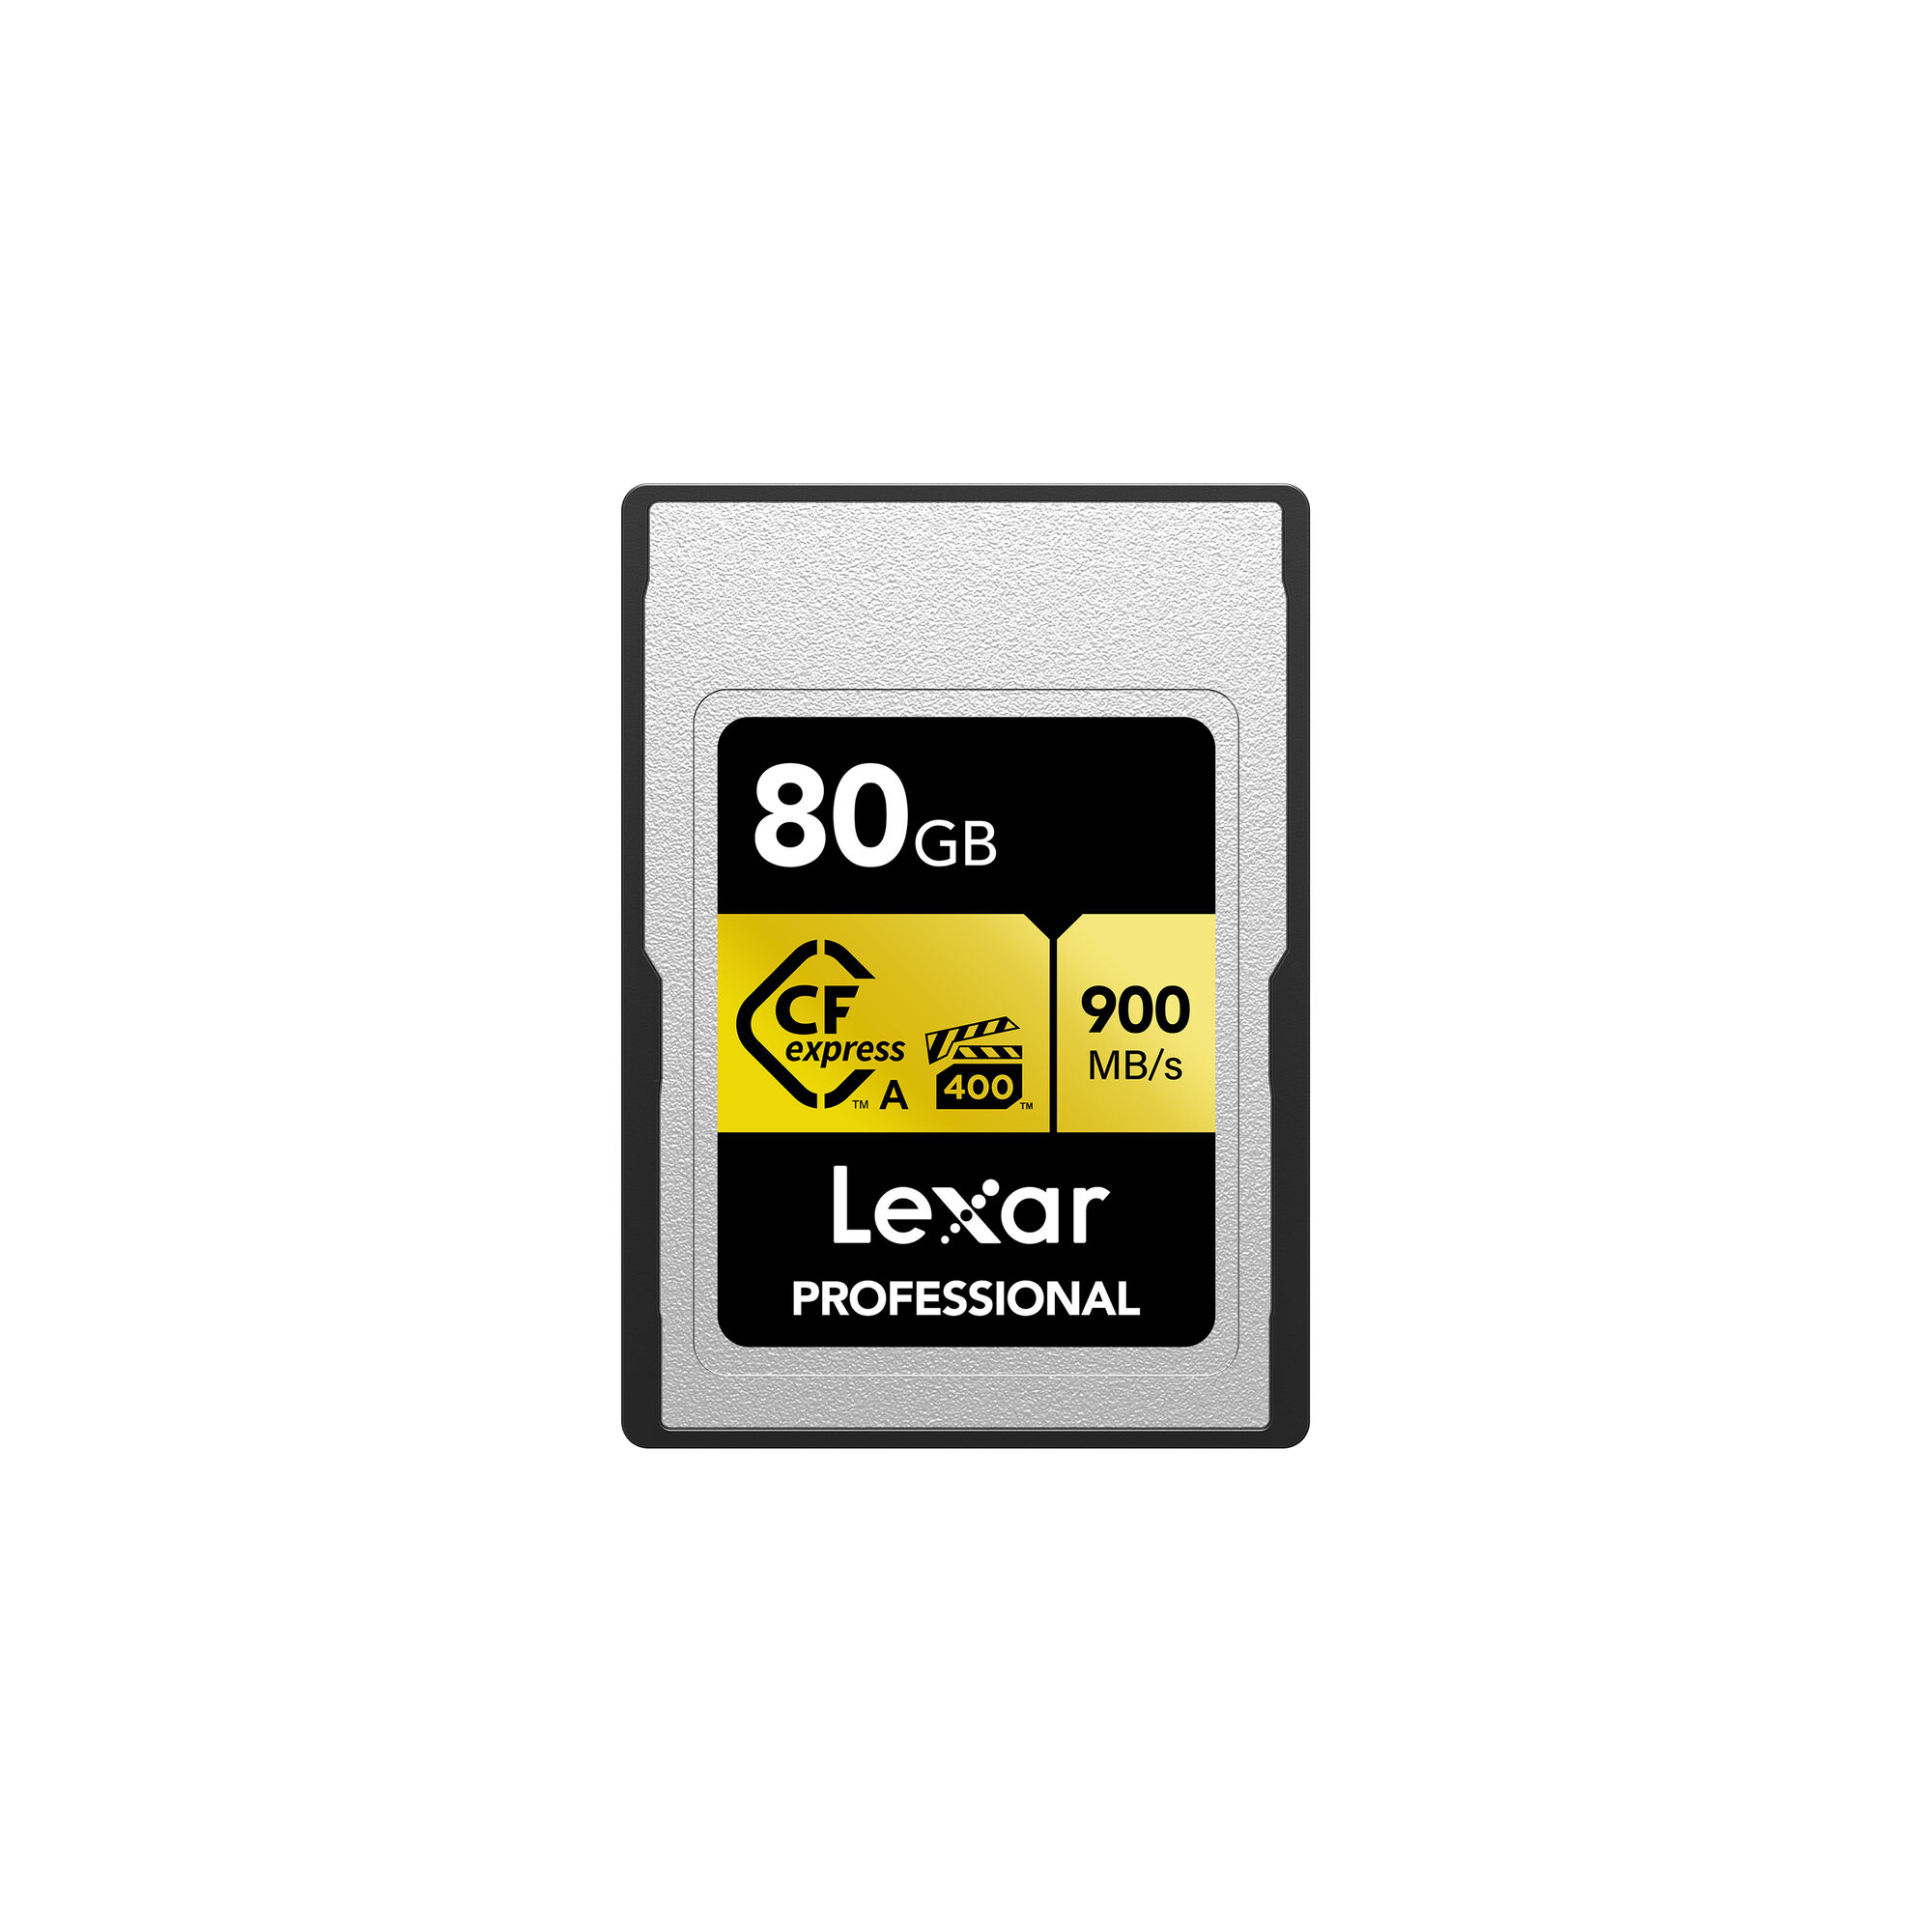 Lexar CF Express Type A 160GB Professional Memory Card